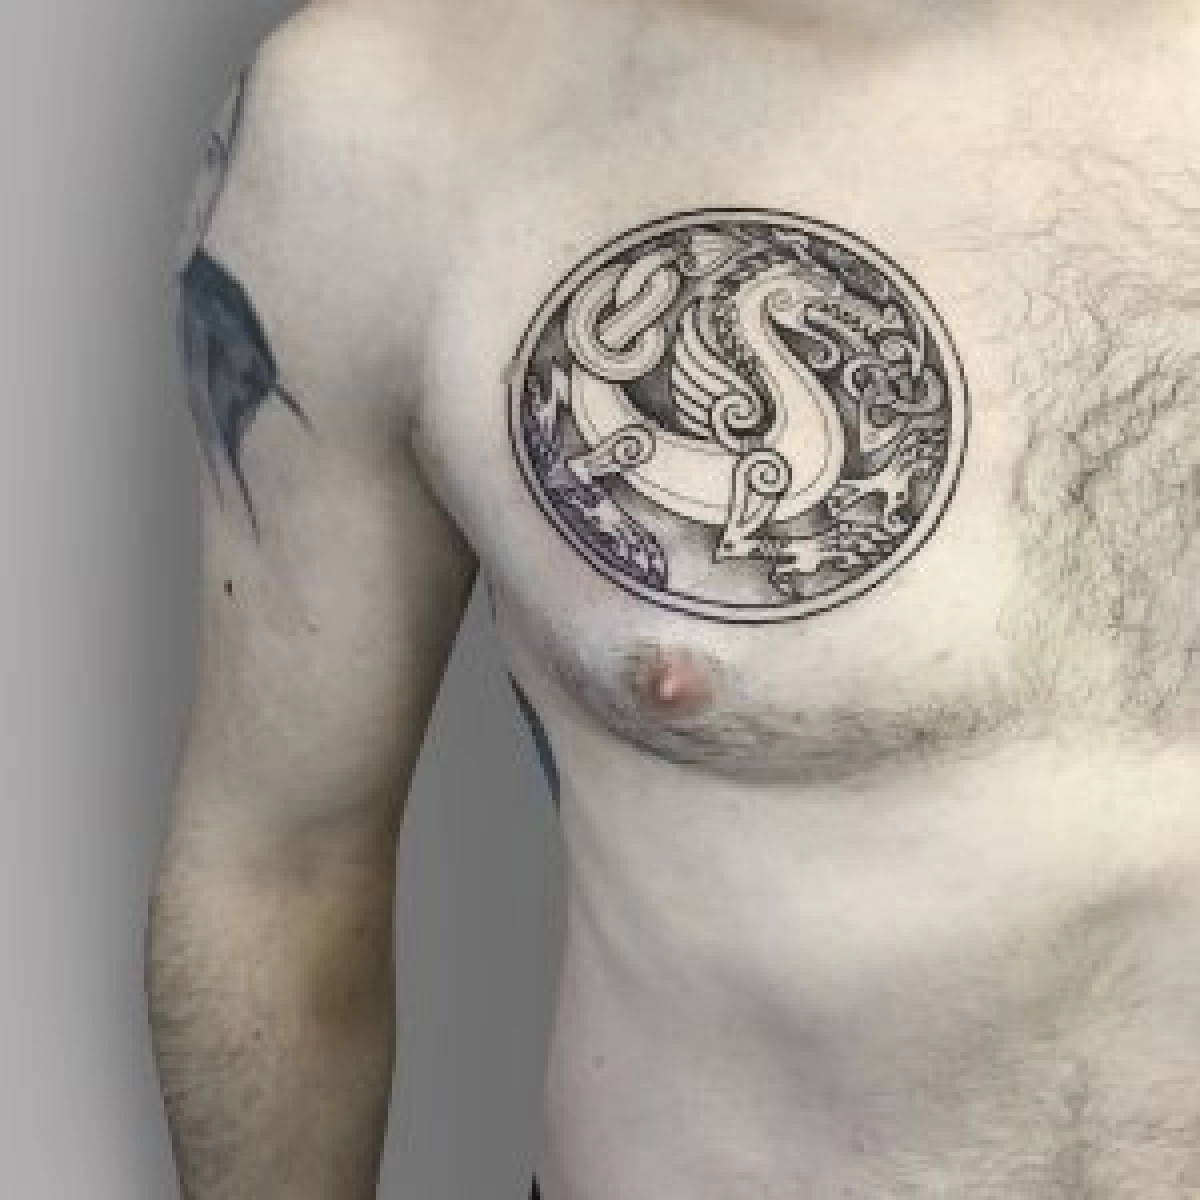 Come Live In My Heart - Irish Claddagh Tattoo Design